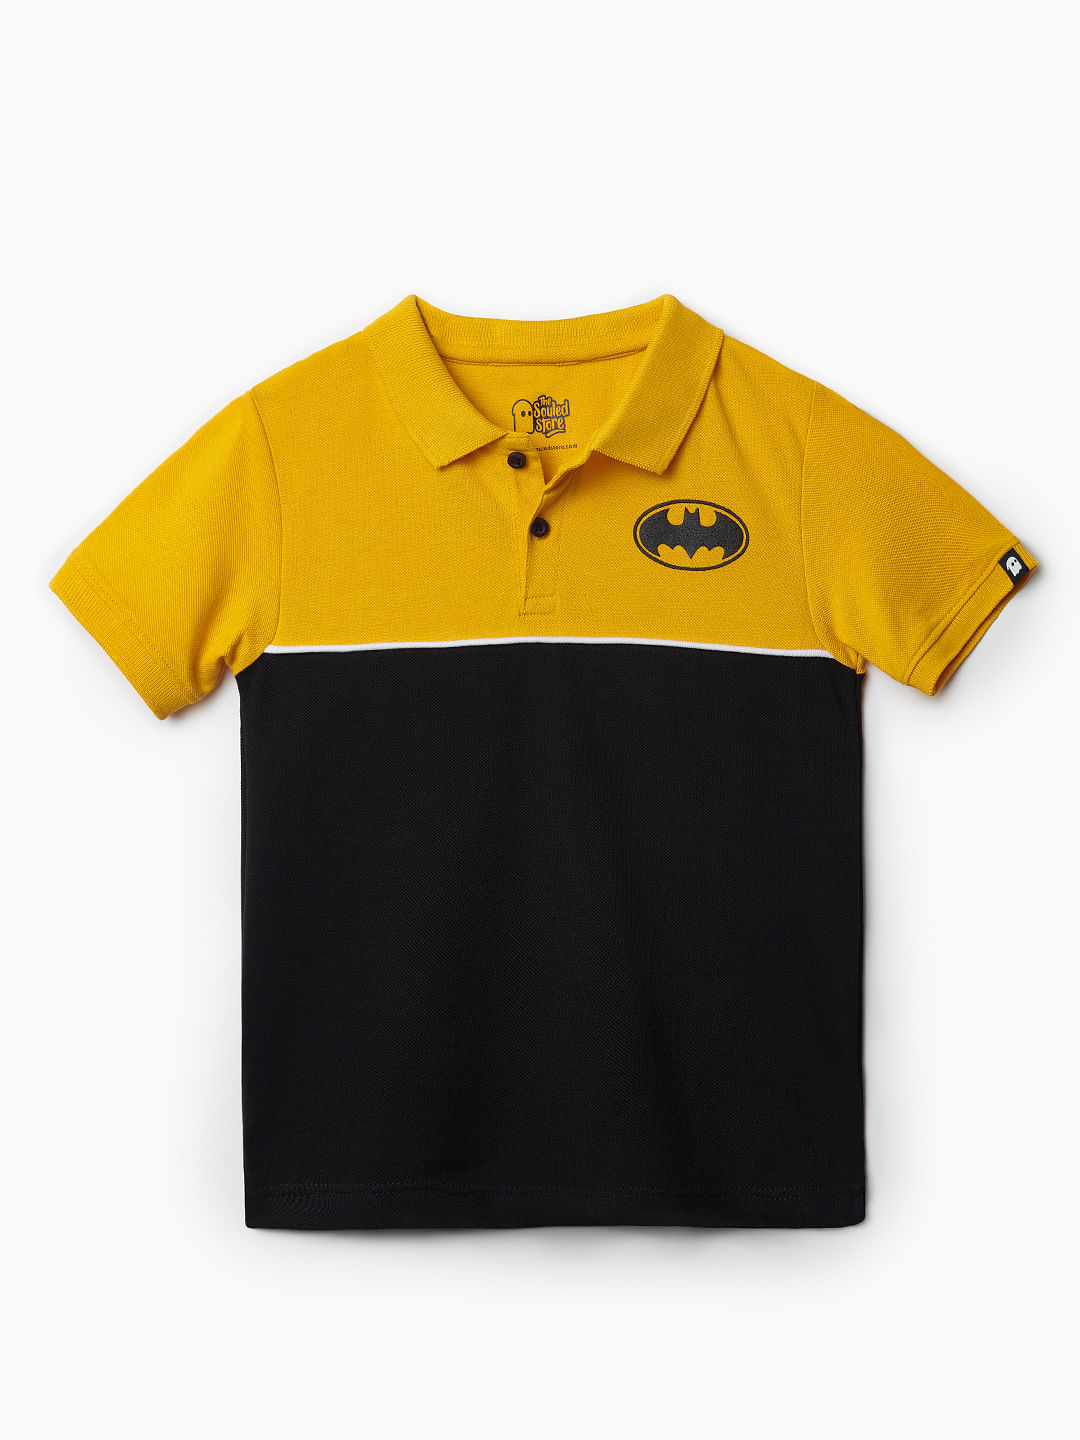 Buy Batman: Logo Boys Polos T-shirt Online